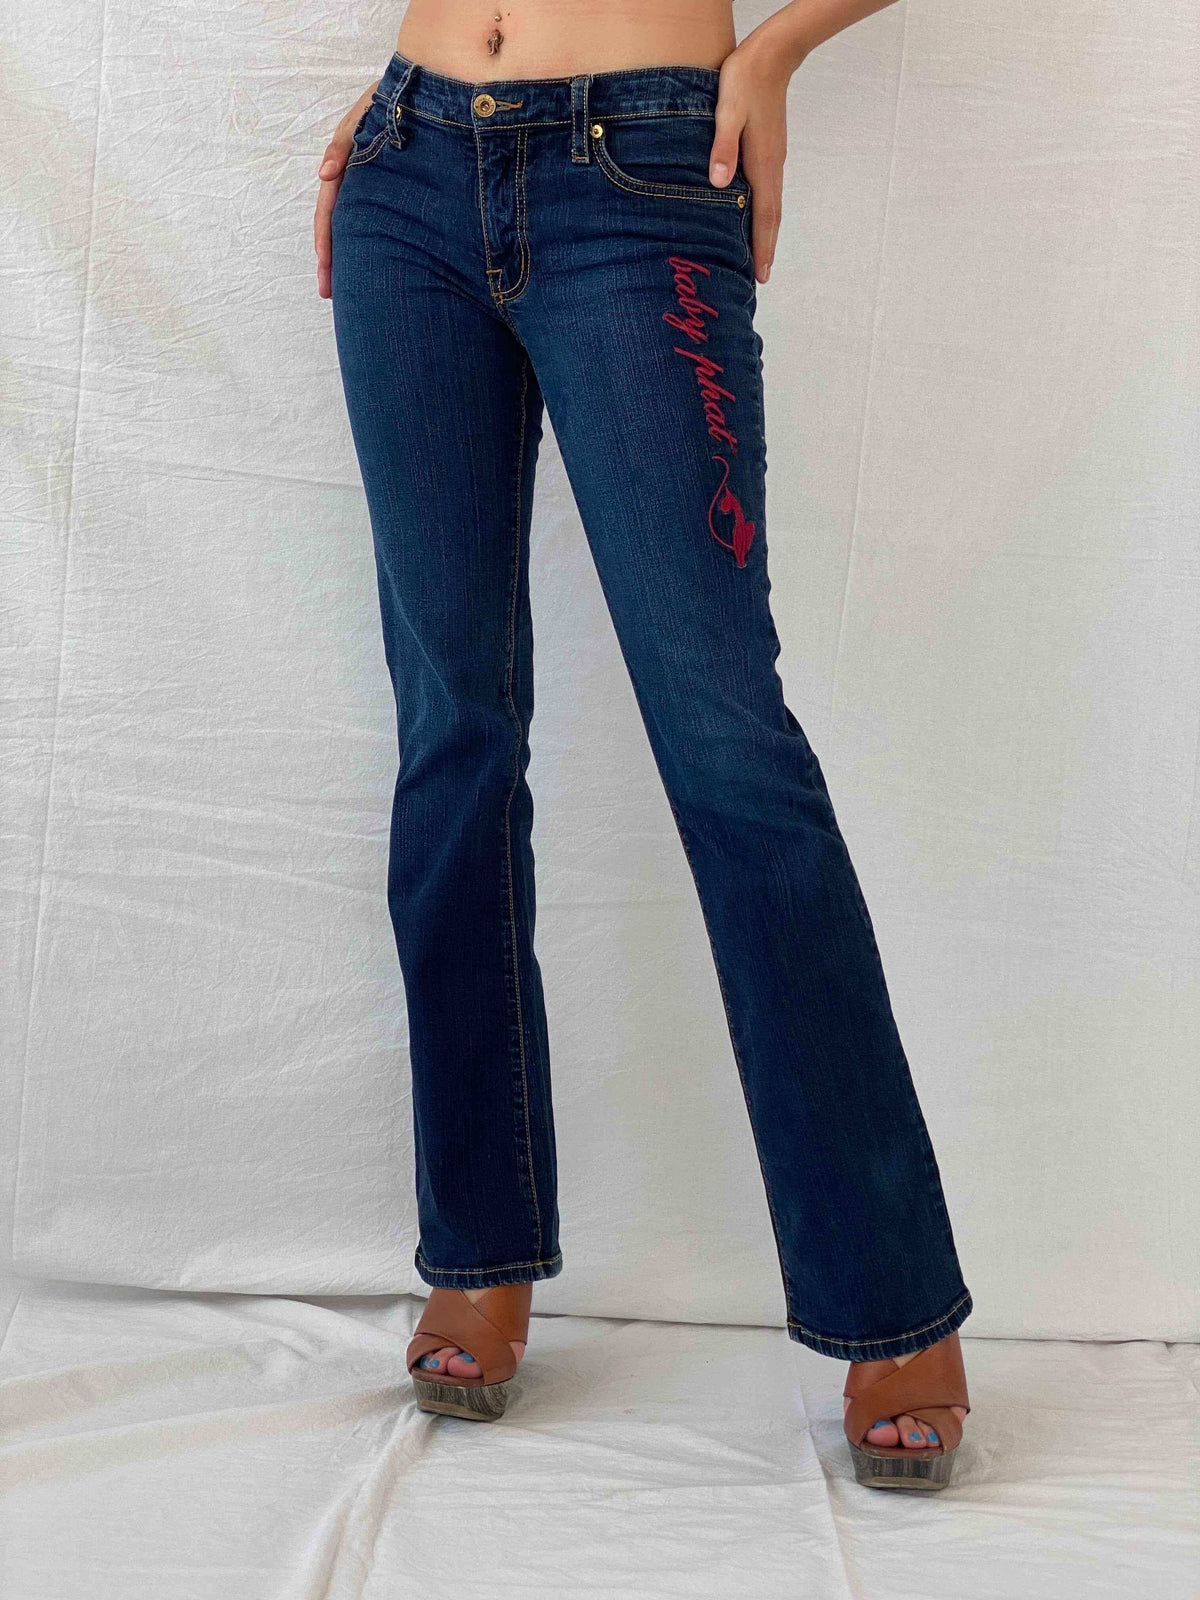 Y2K Baby Phat Low Rise Jeans - Balagan Vintage